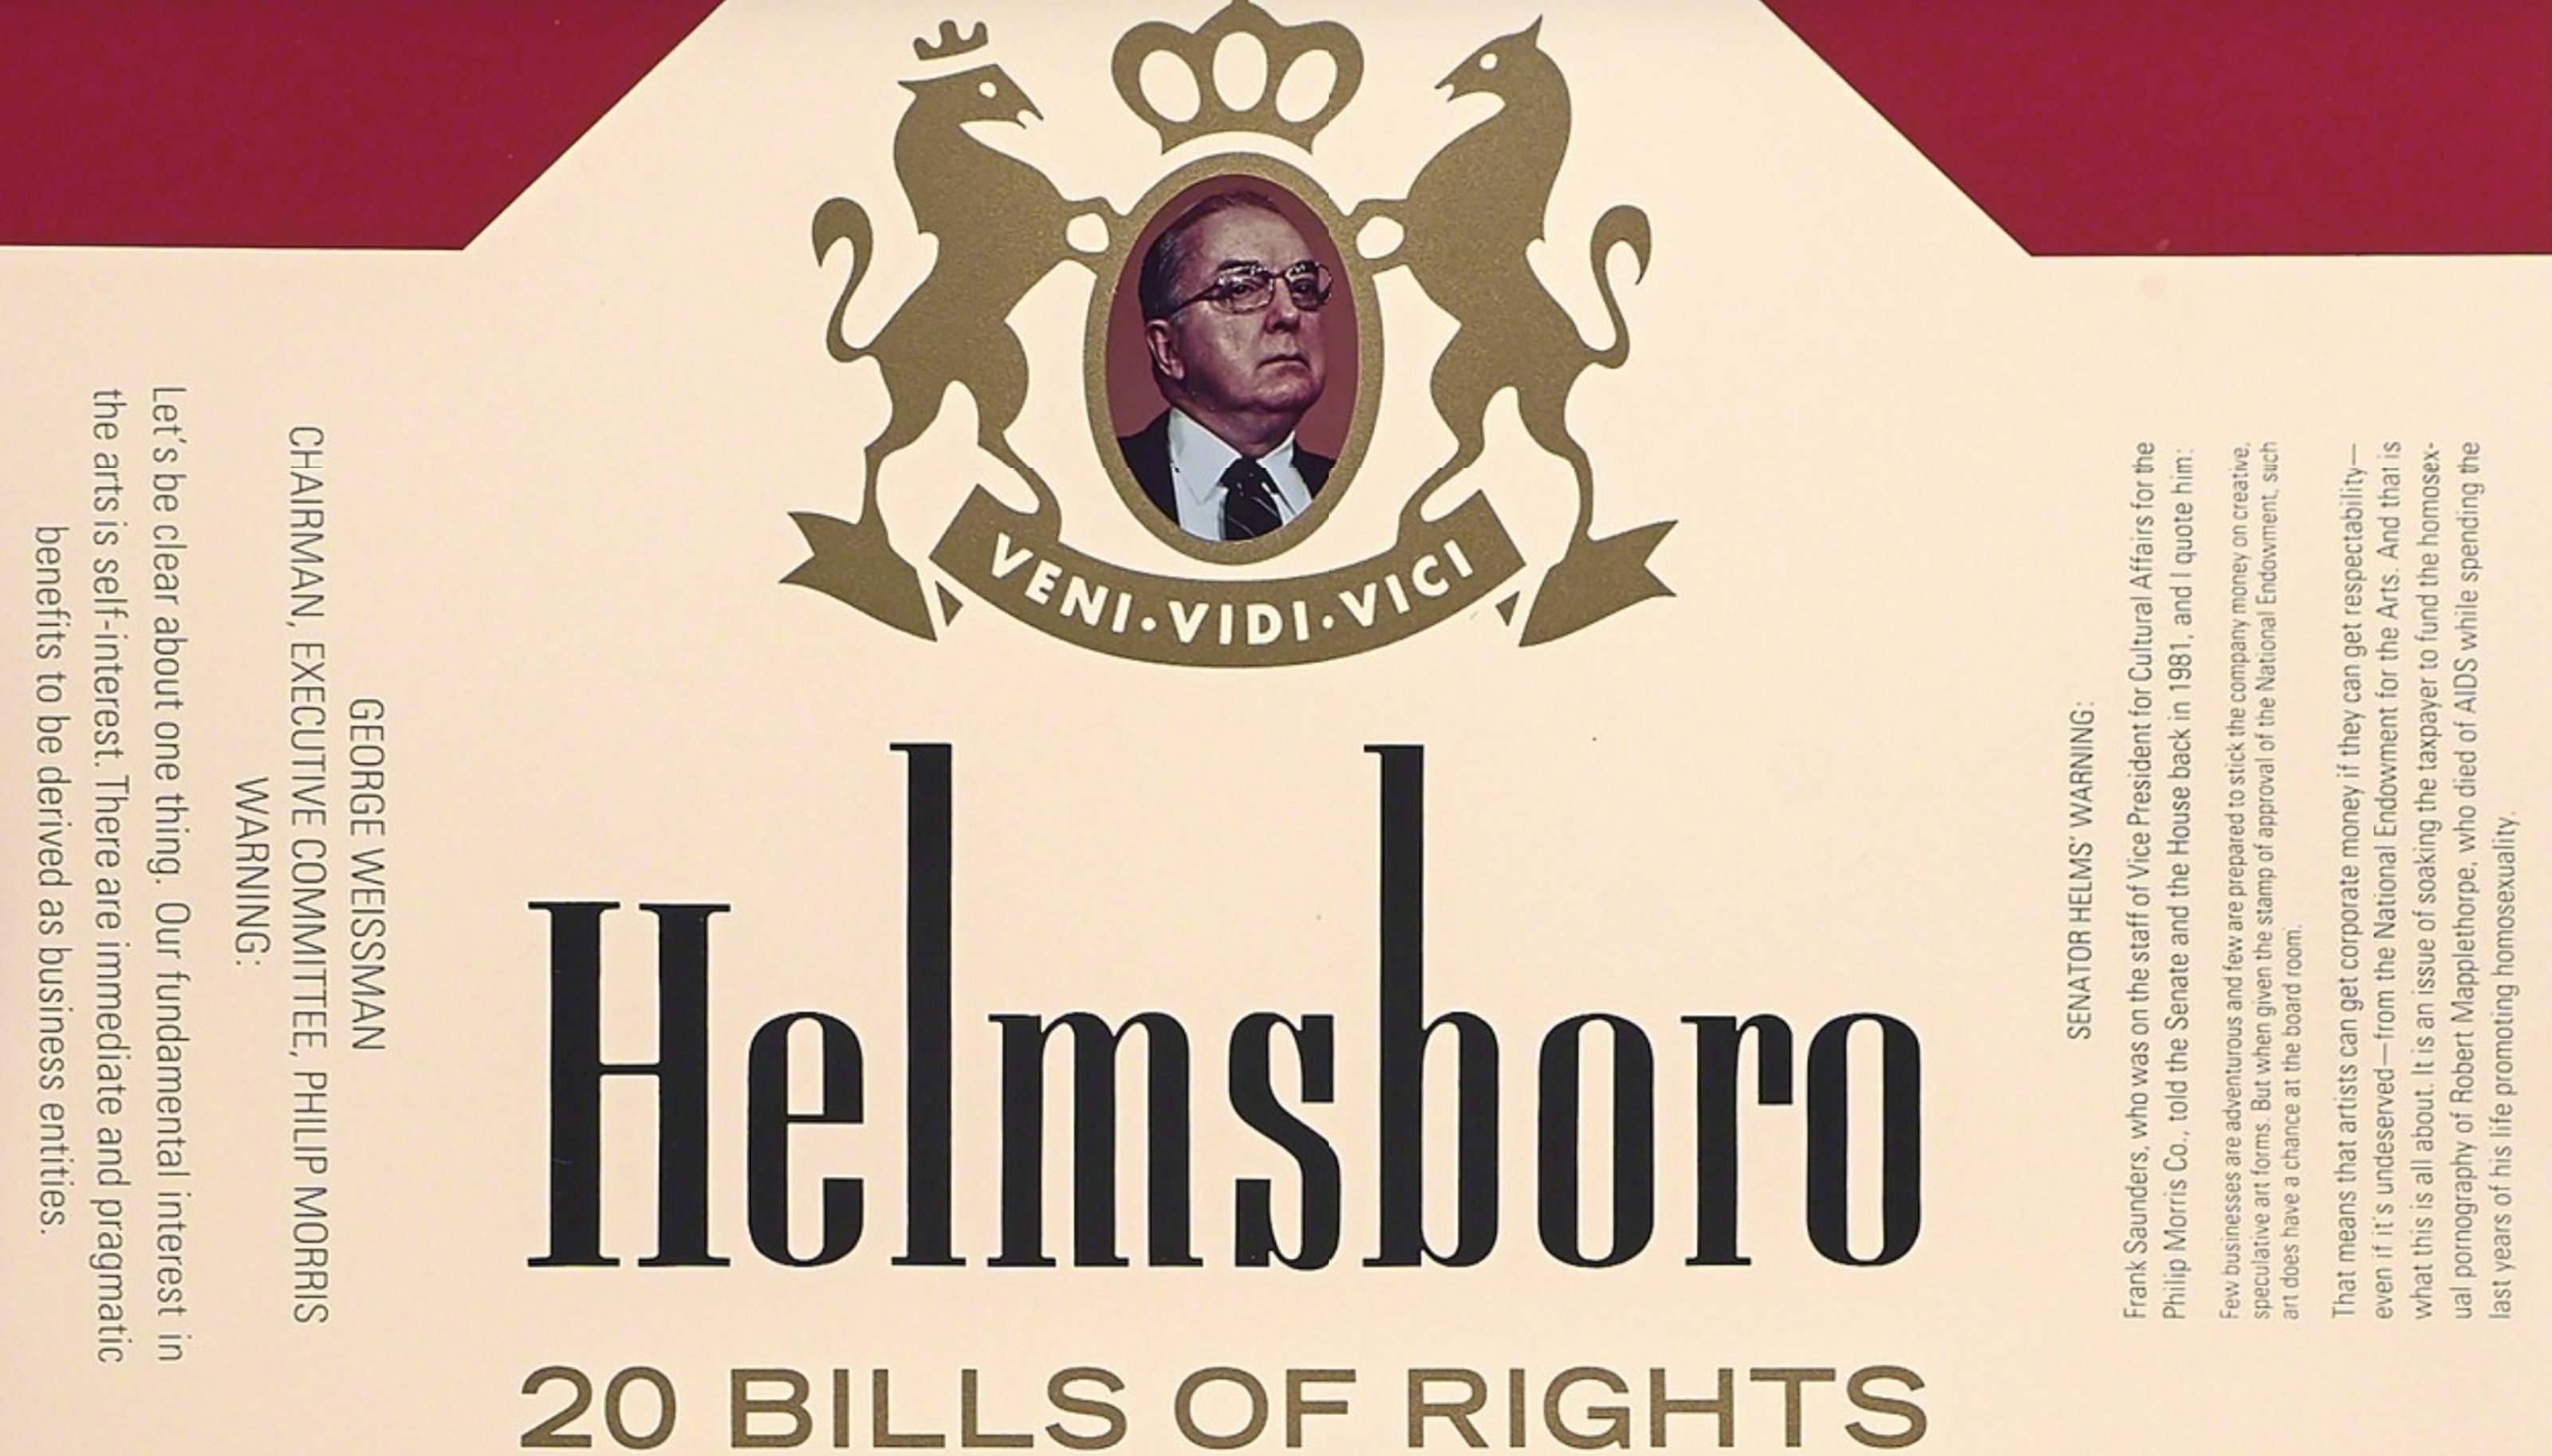 Helmsboro, 20 Bills of Rights, created by Hans Haacke